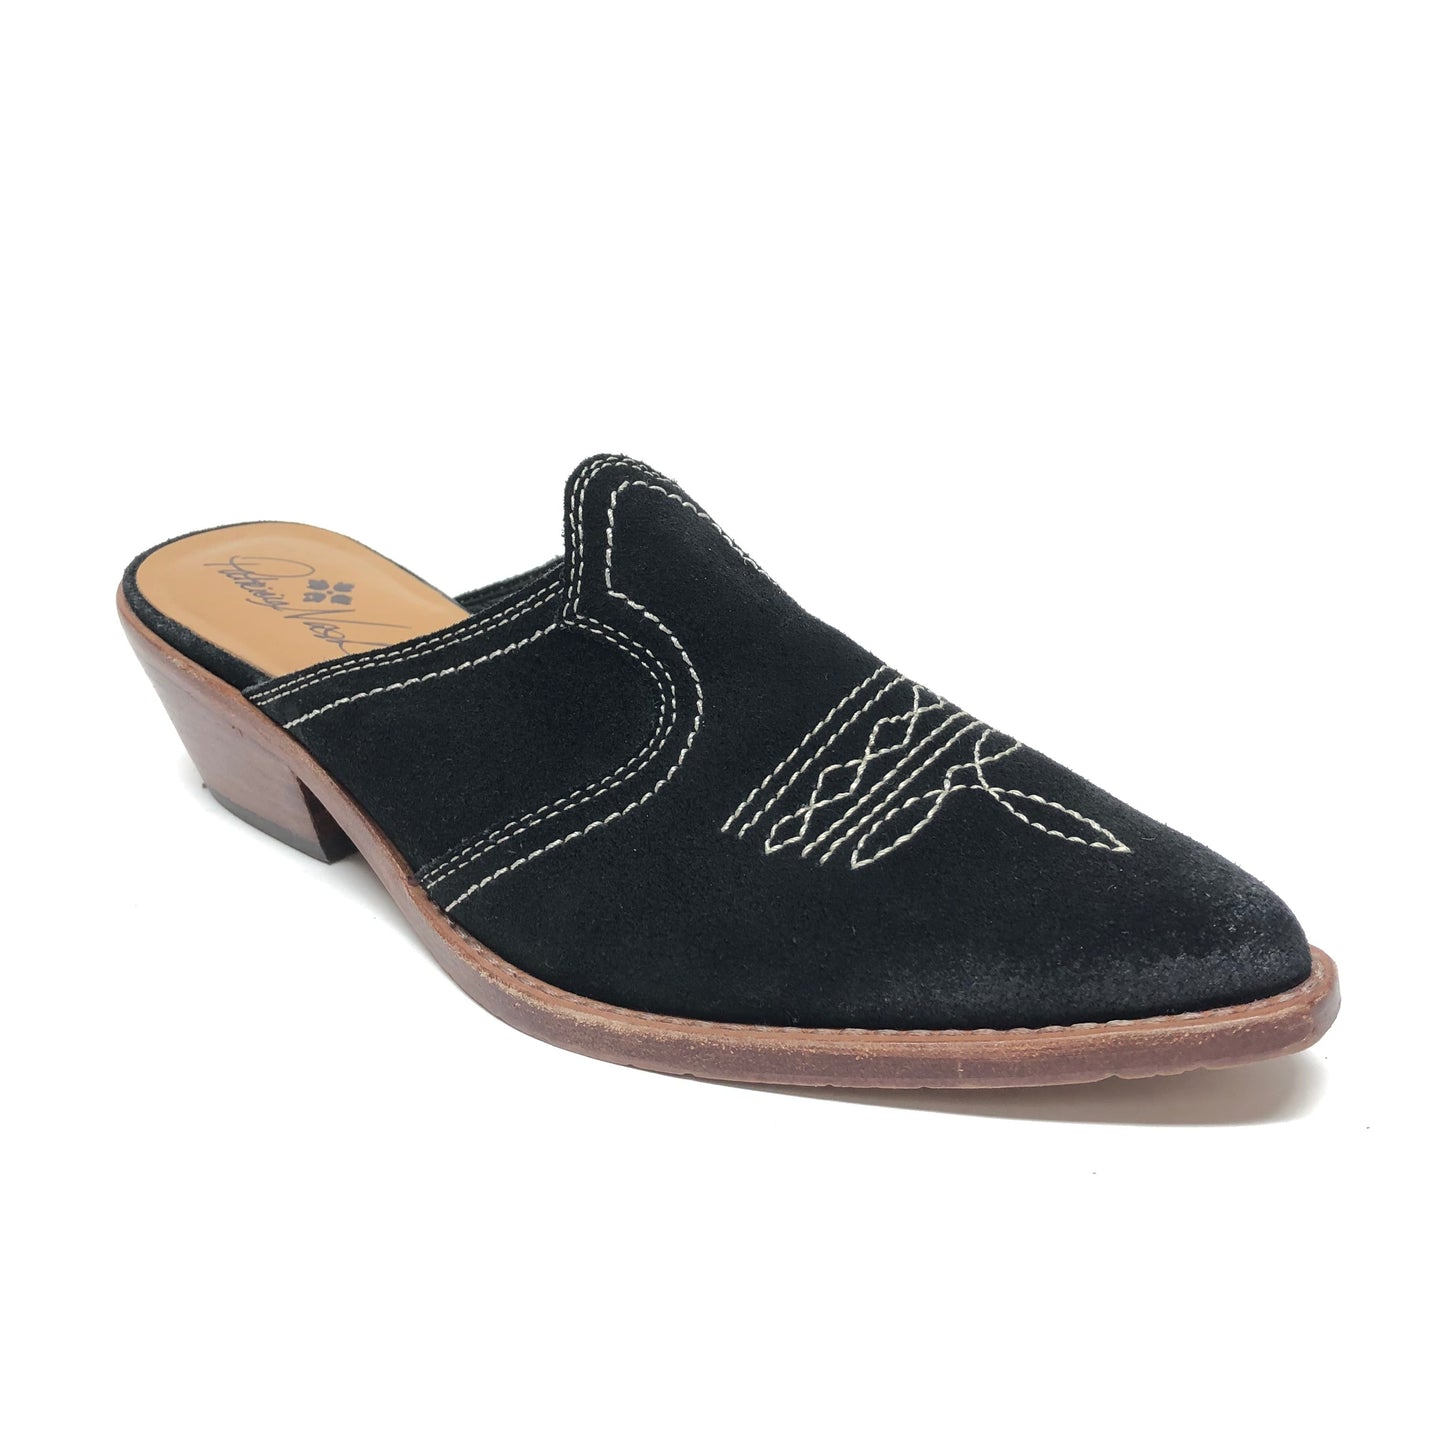 Black Shoes Heels Block Patricia Nash, Size 9.5